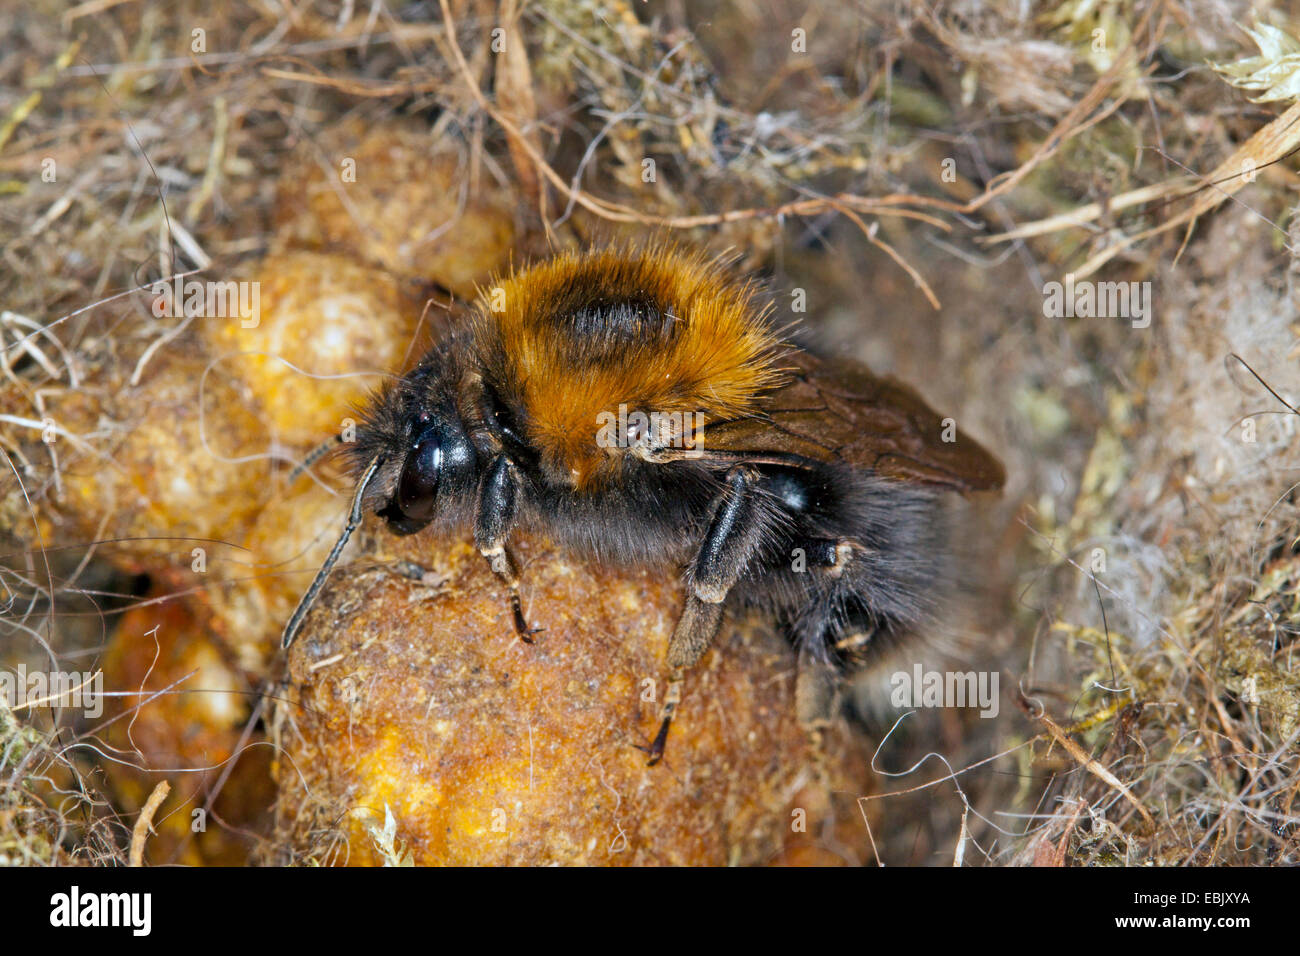 Tree Bumblebee, New Garden Bumblebee (Bombus hypnorum), queen in the nest, Germany, Mecklenburg-Western Pomerania Stock Photo